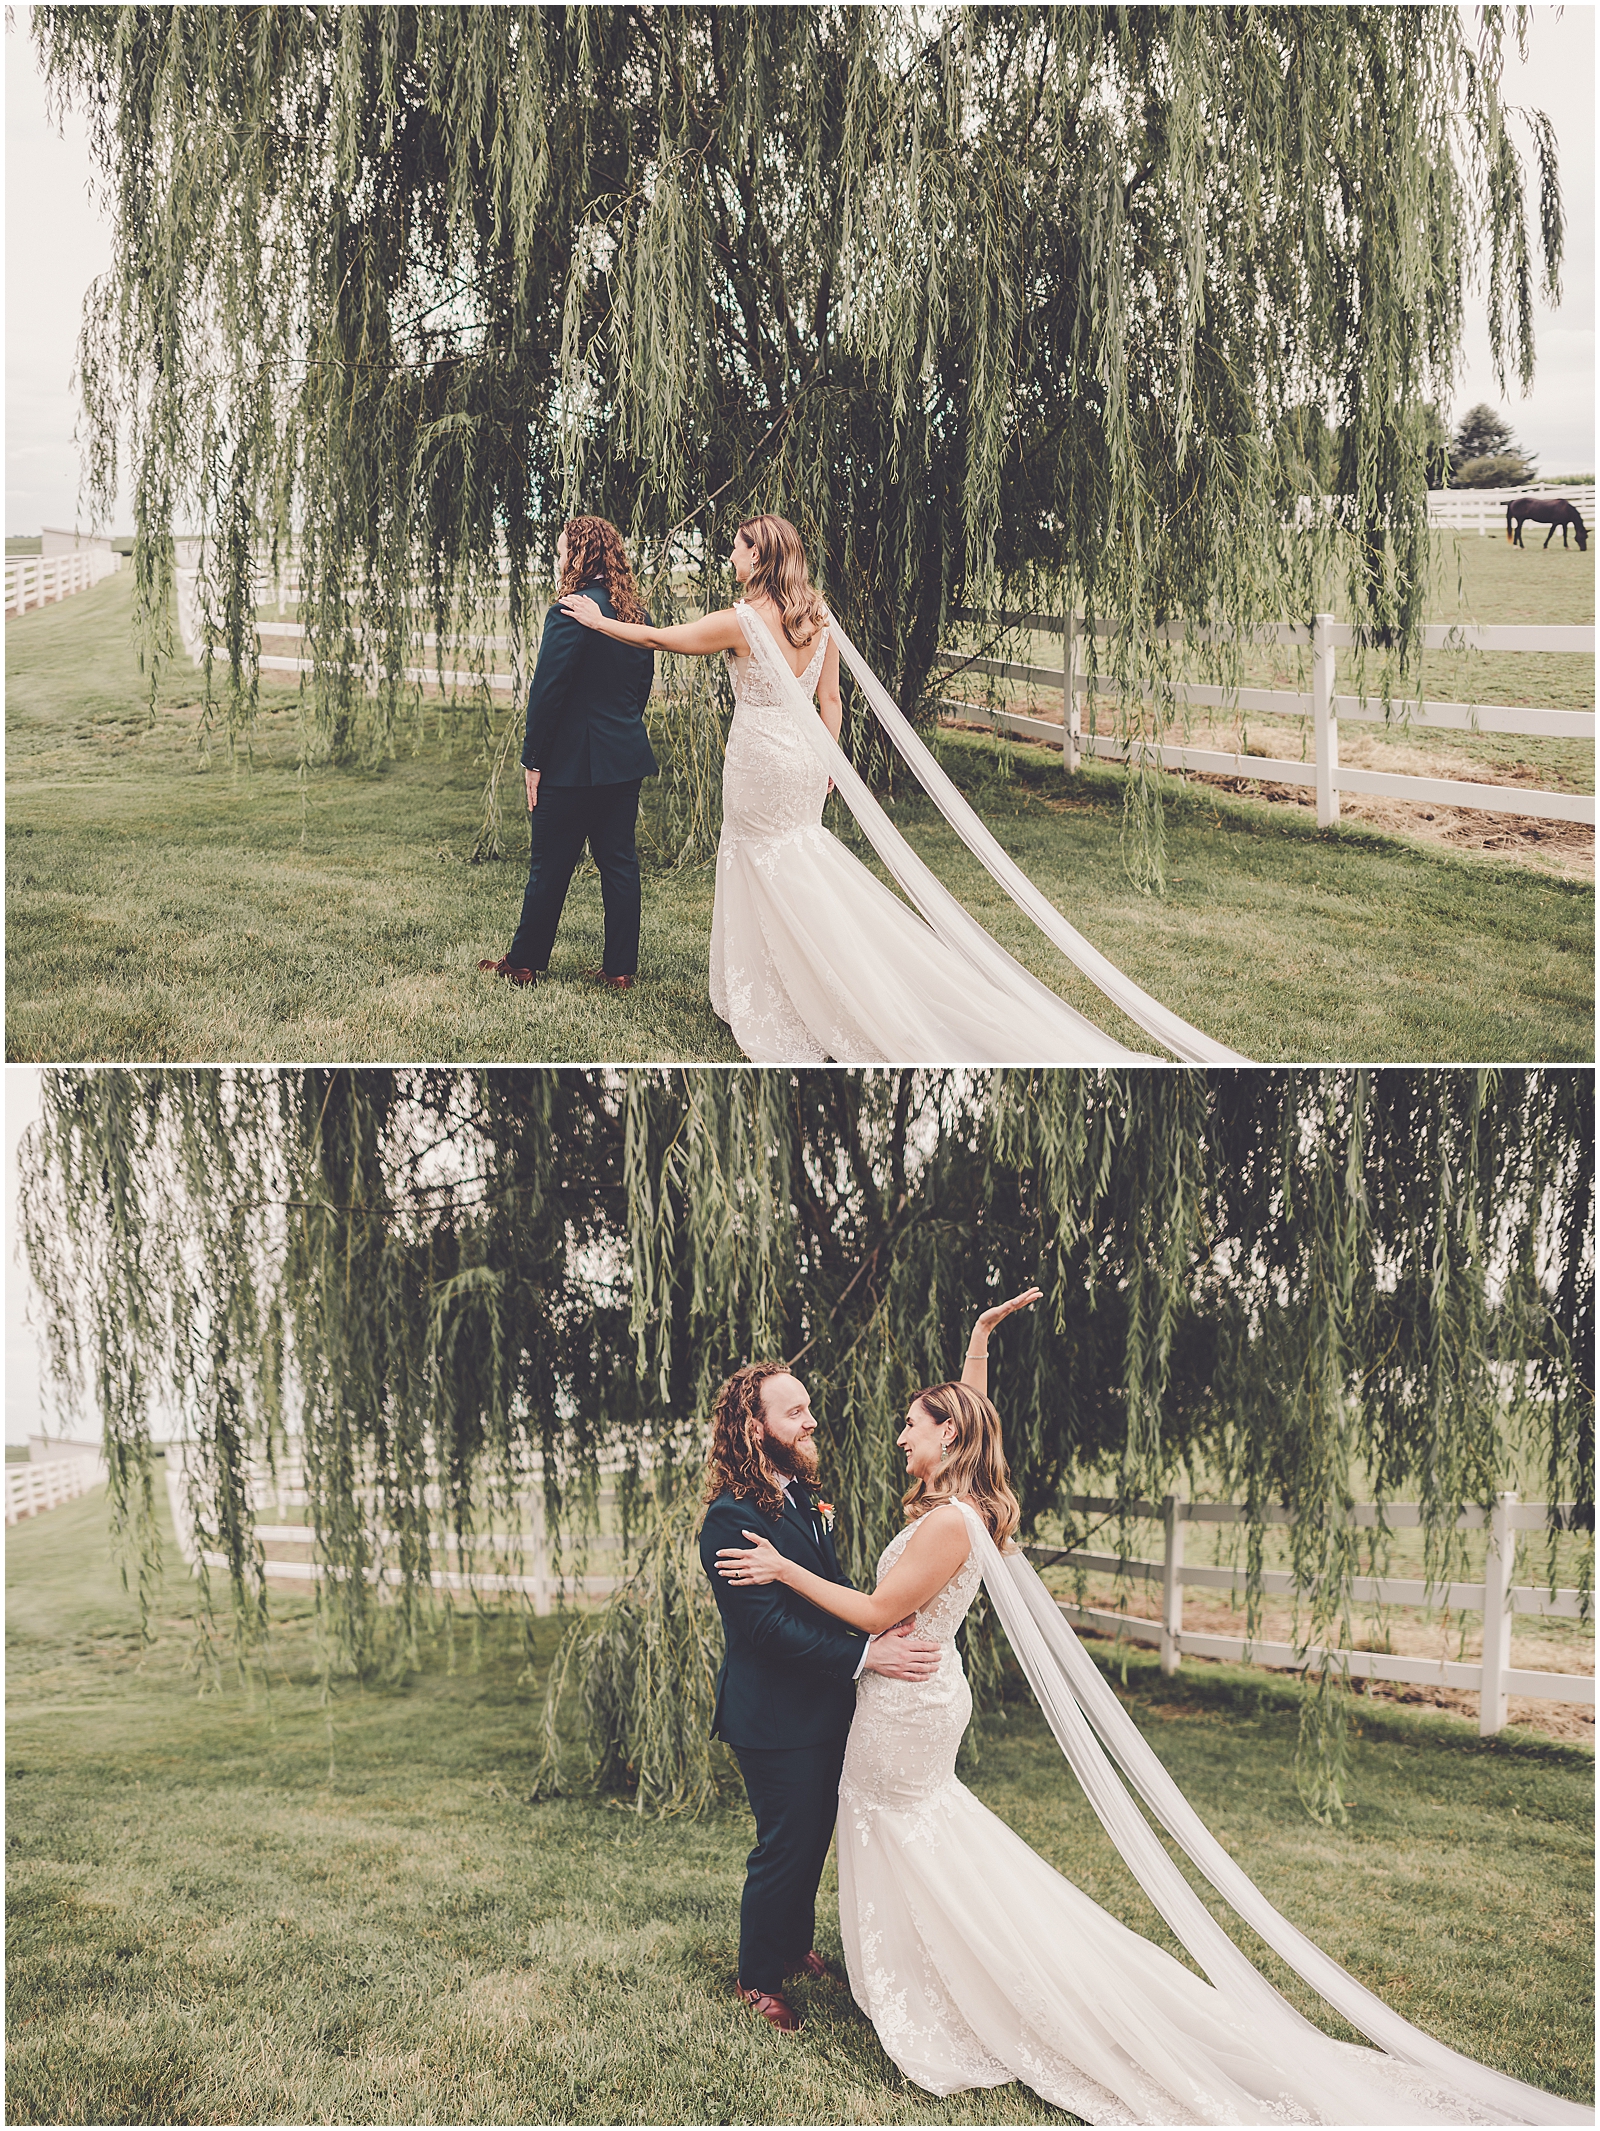 Marisa & Kristopher's summer Northfork Farm wedding photos in Oswego, Illinois with Chicagoland wedding photographer Kara Evans Photographer.